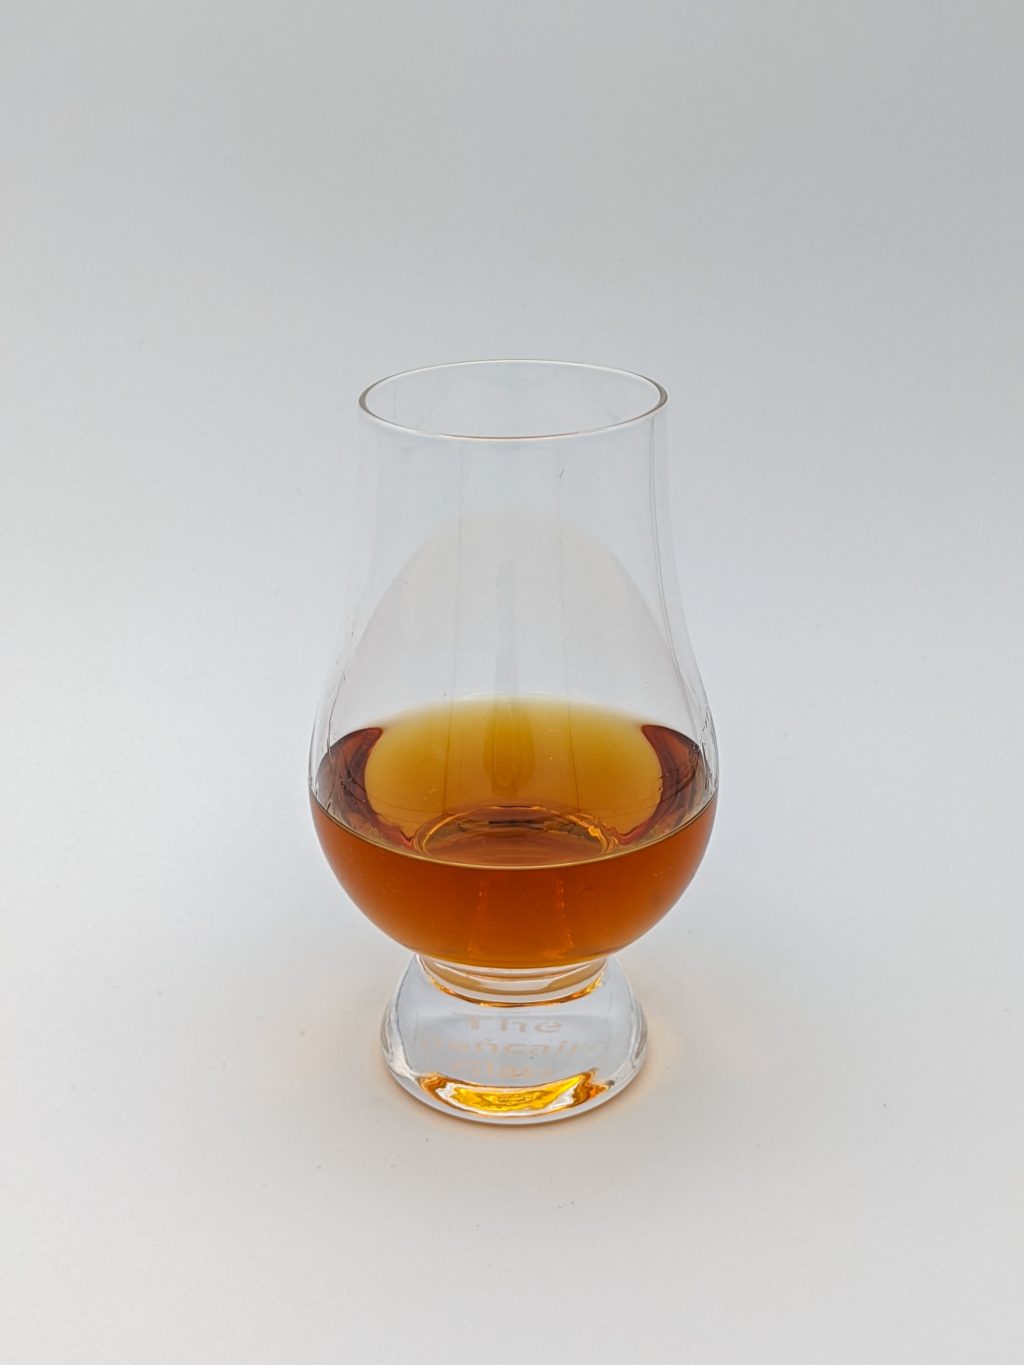 amber colored liquid in a glen cairn glass